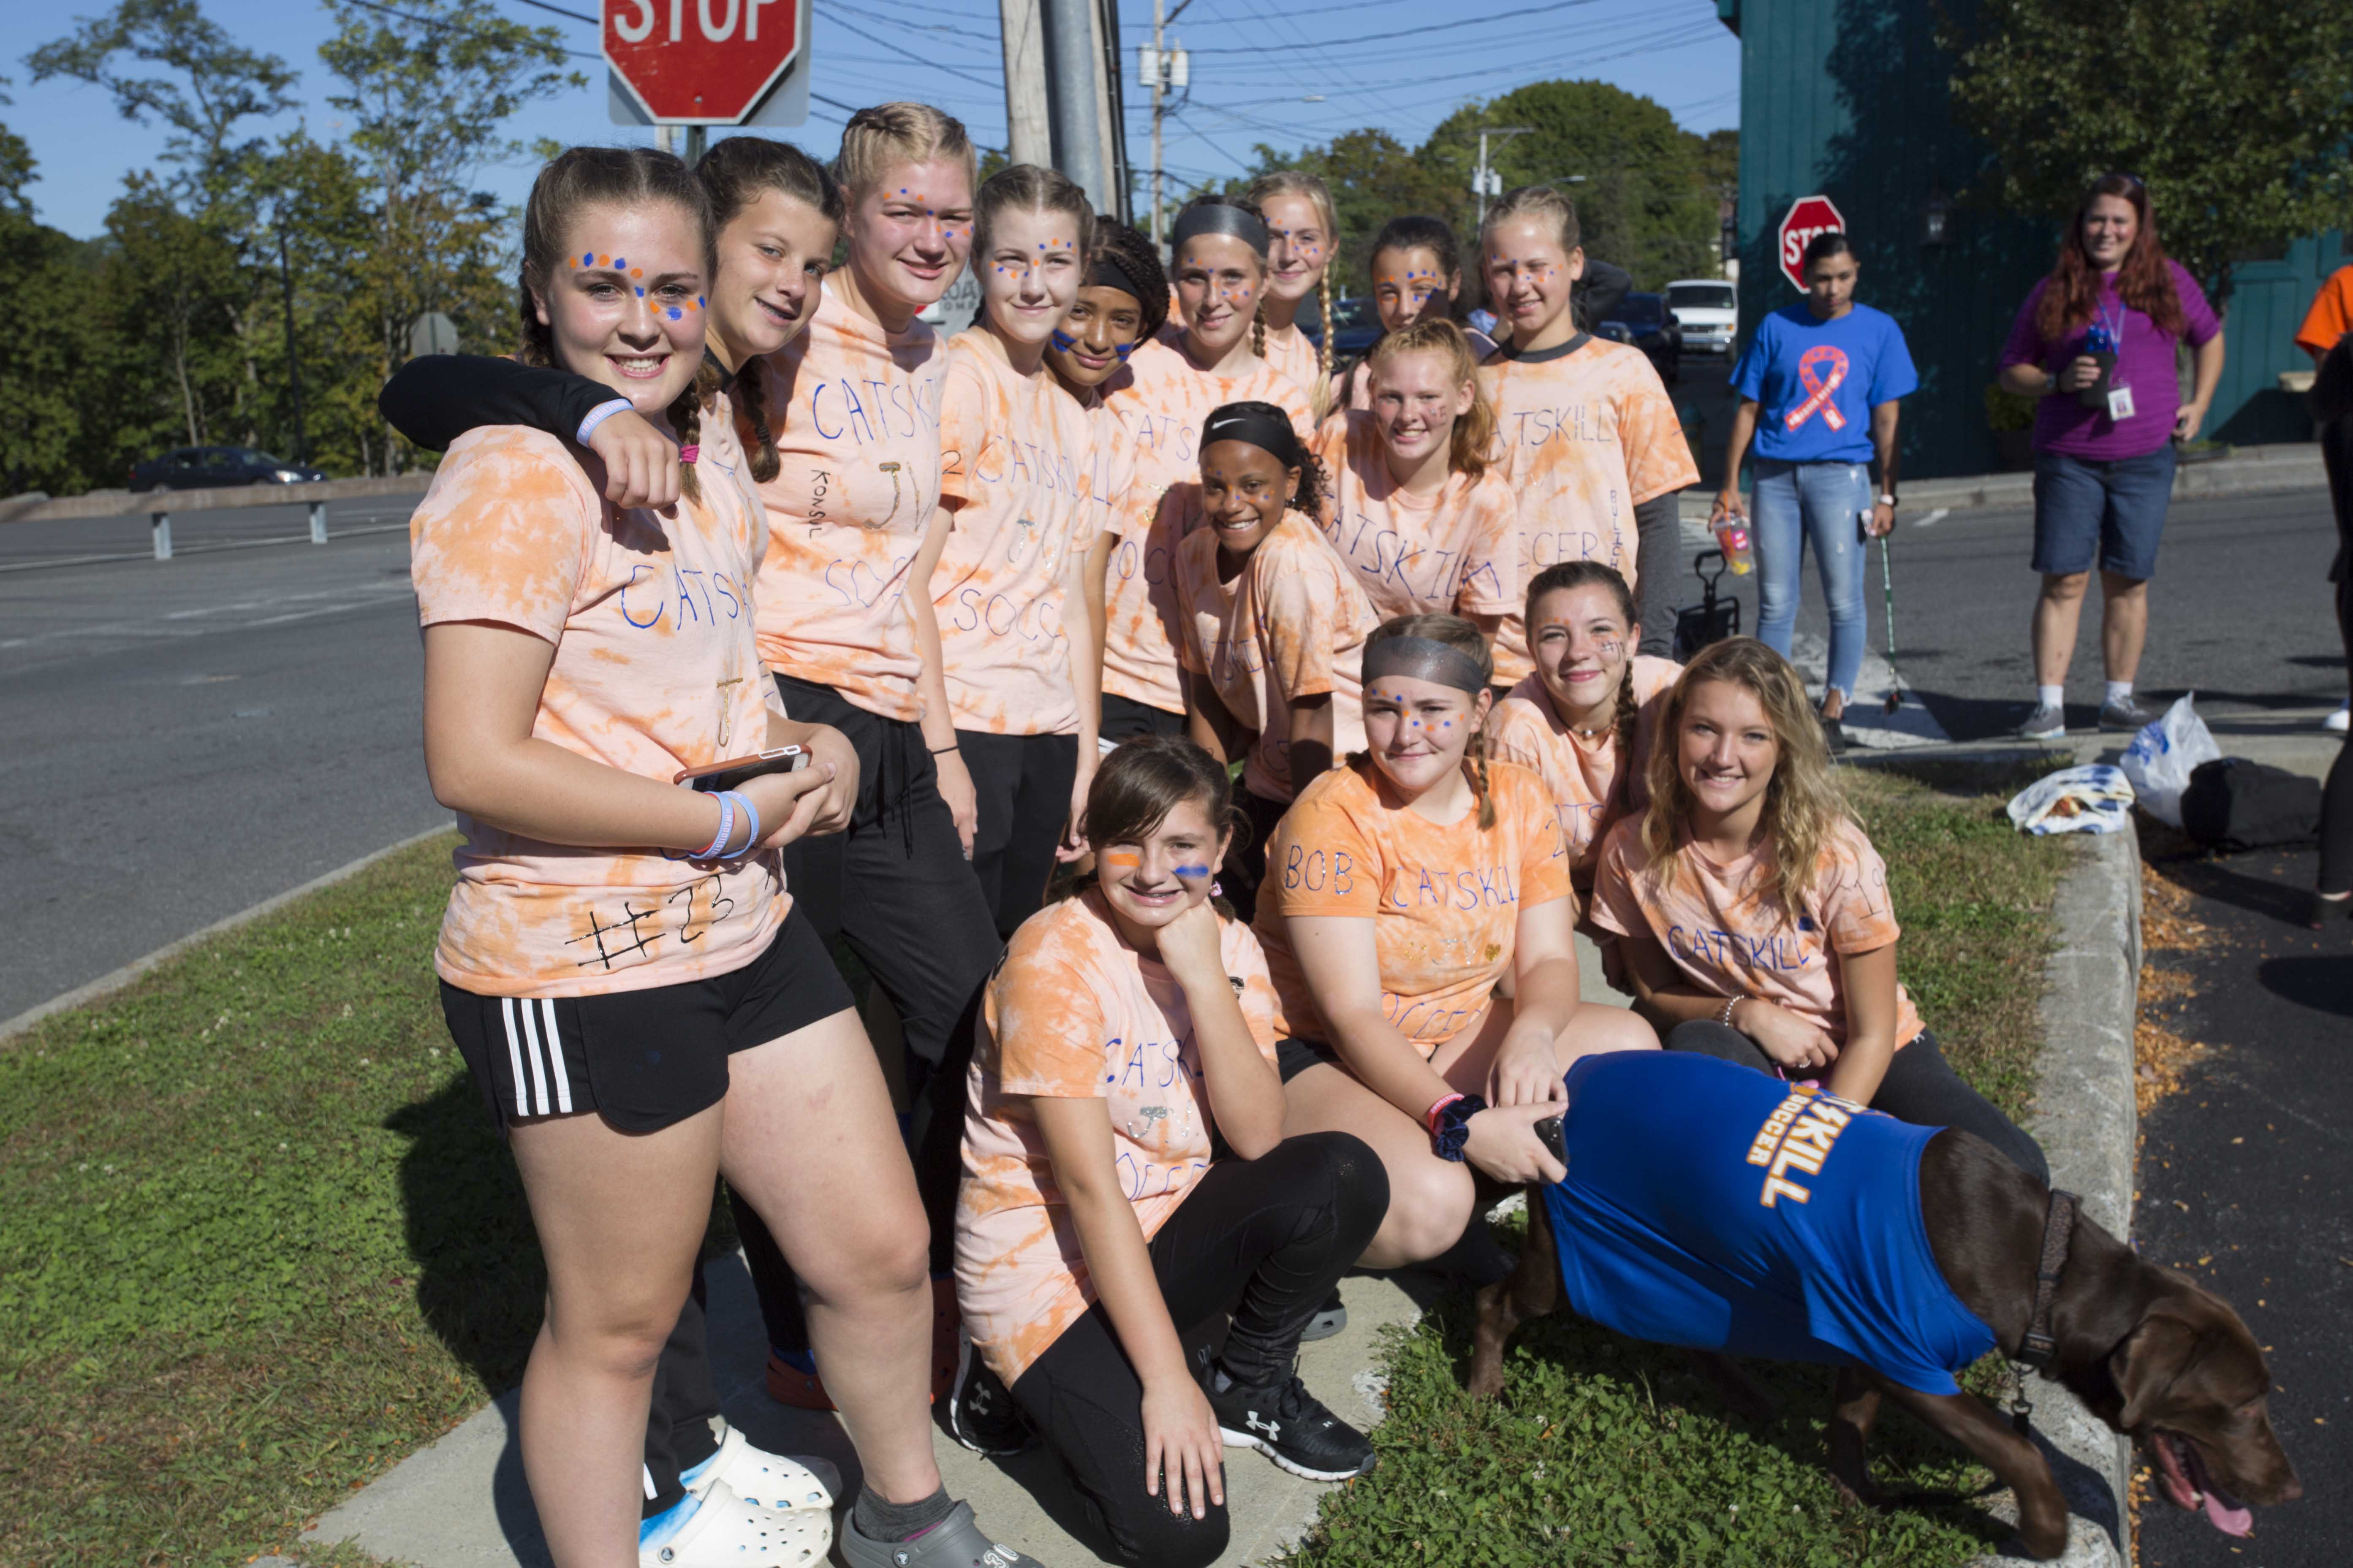 girls sports team photo all wearing orange shirts